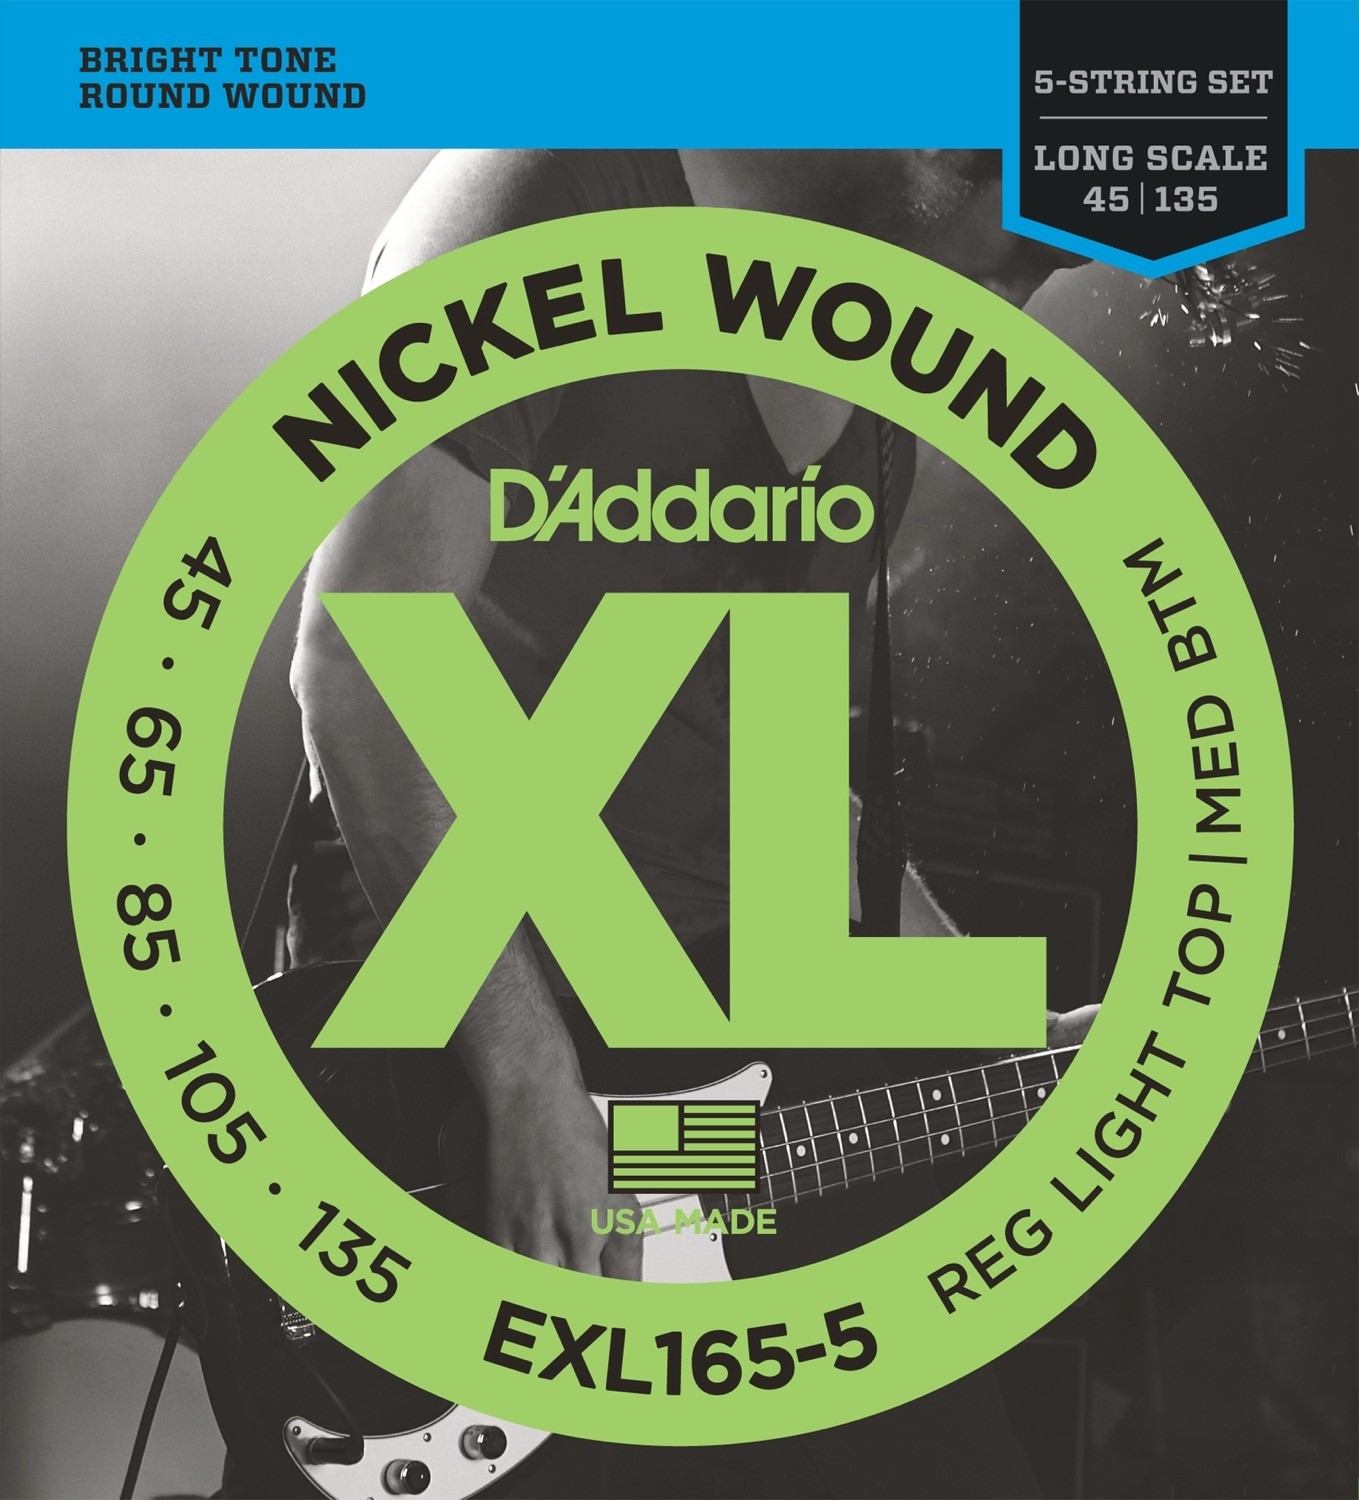 D'addario EXL165-5 Light/Long Scale basstrenger 045-135 5-strengs sett